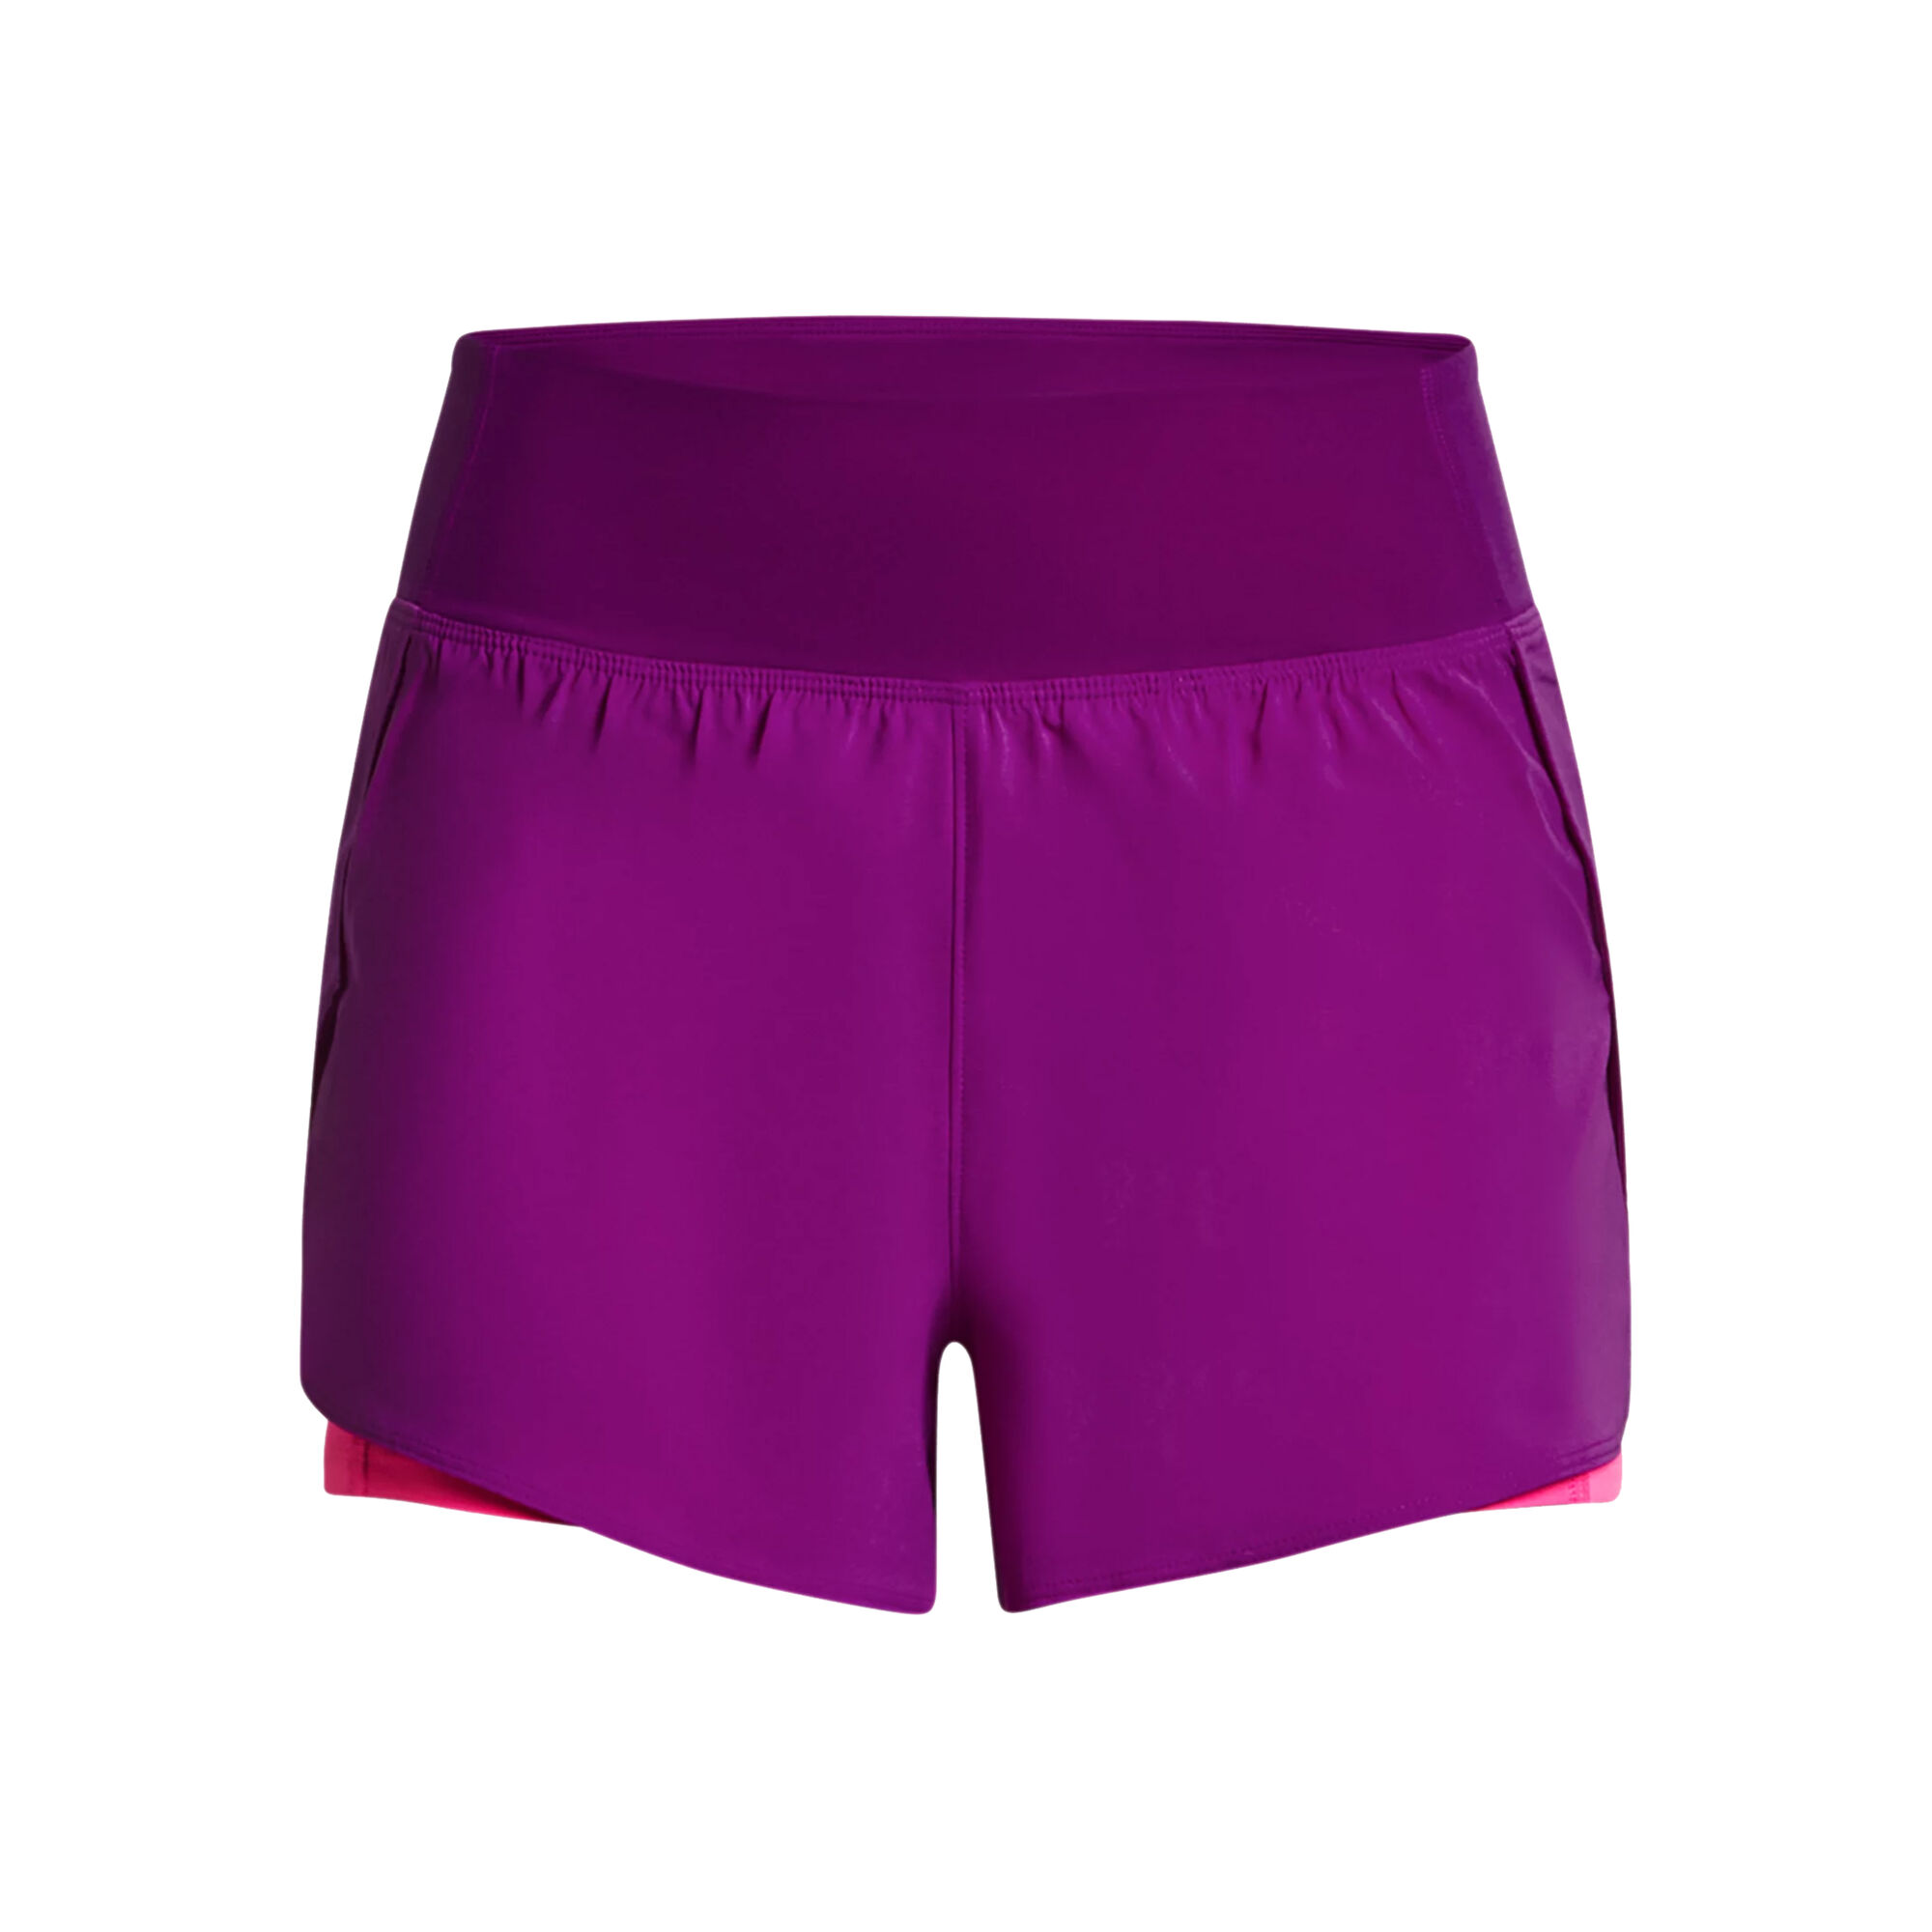 Buy Under Armour Flex Woven 2in1 Shorts Women Violet online